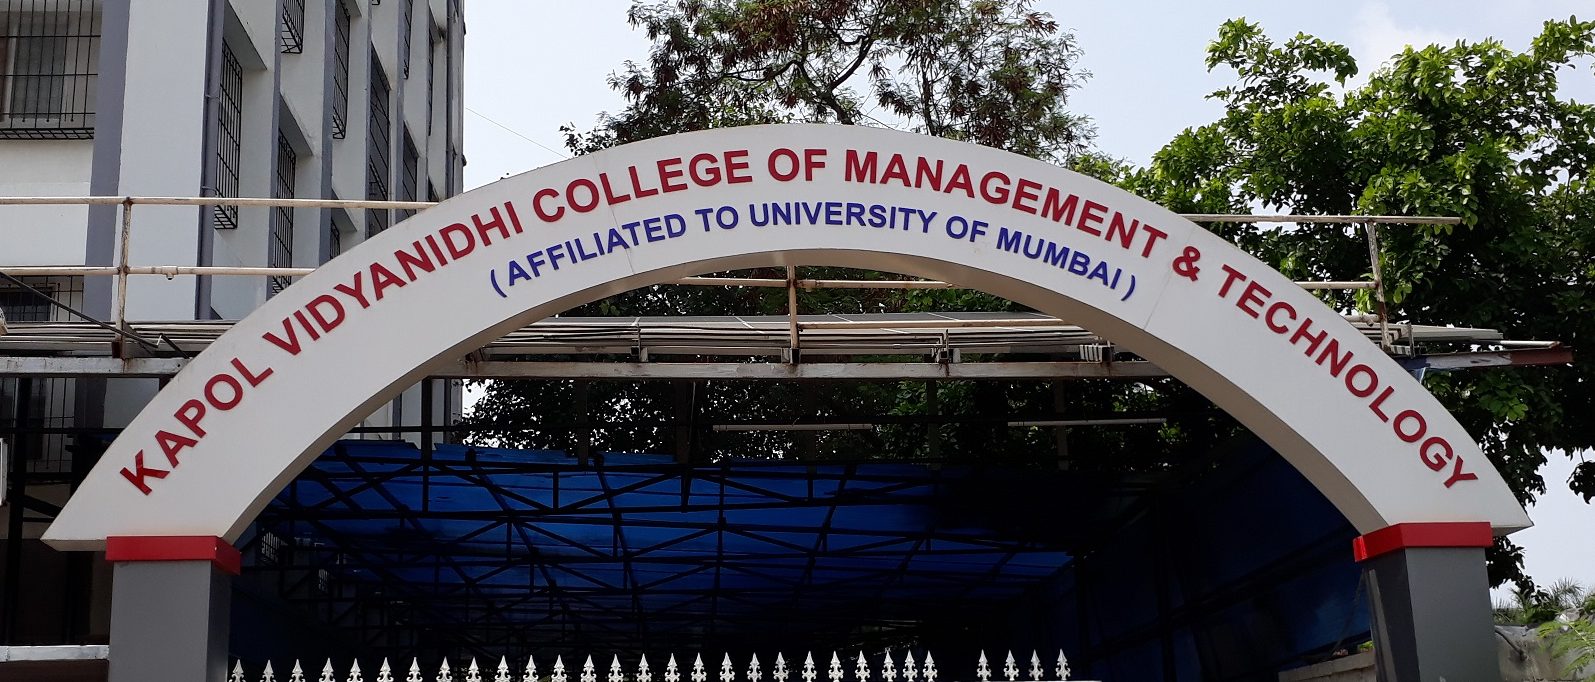 Kapol Vidyanidhi College Of Management and Technology, Mumbai Image